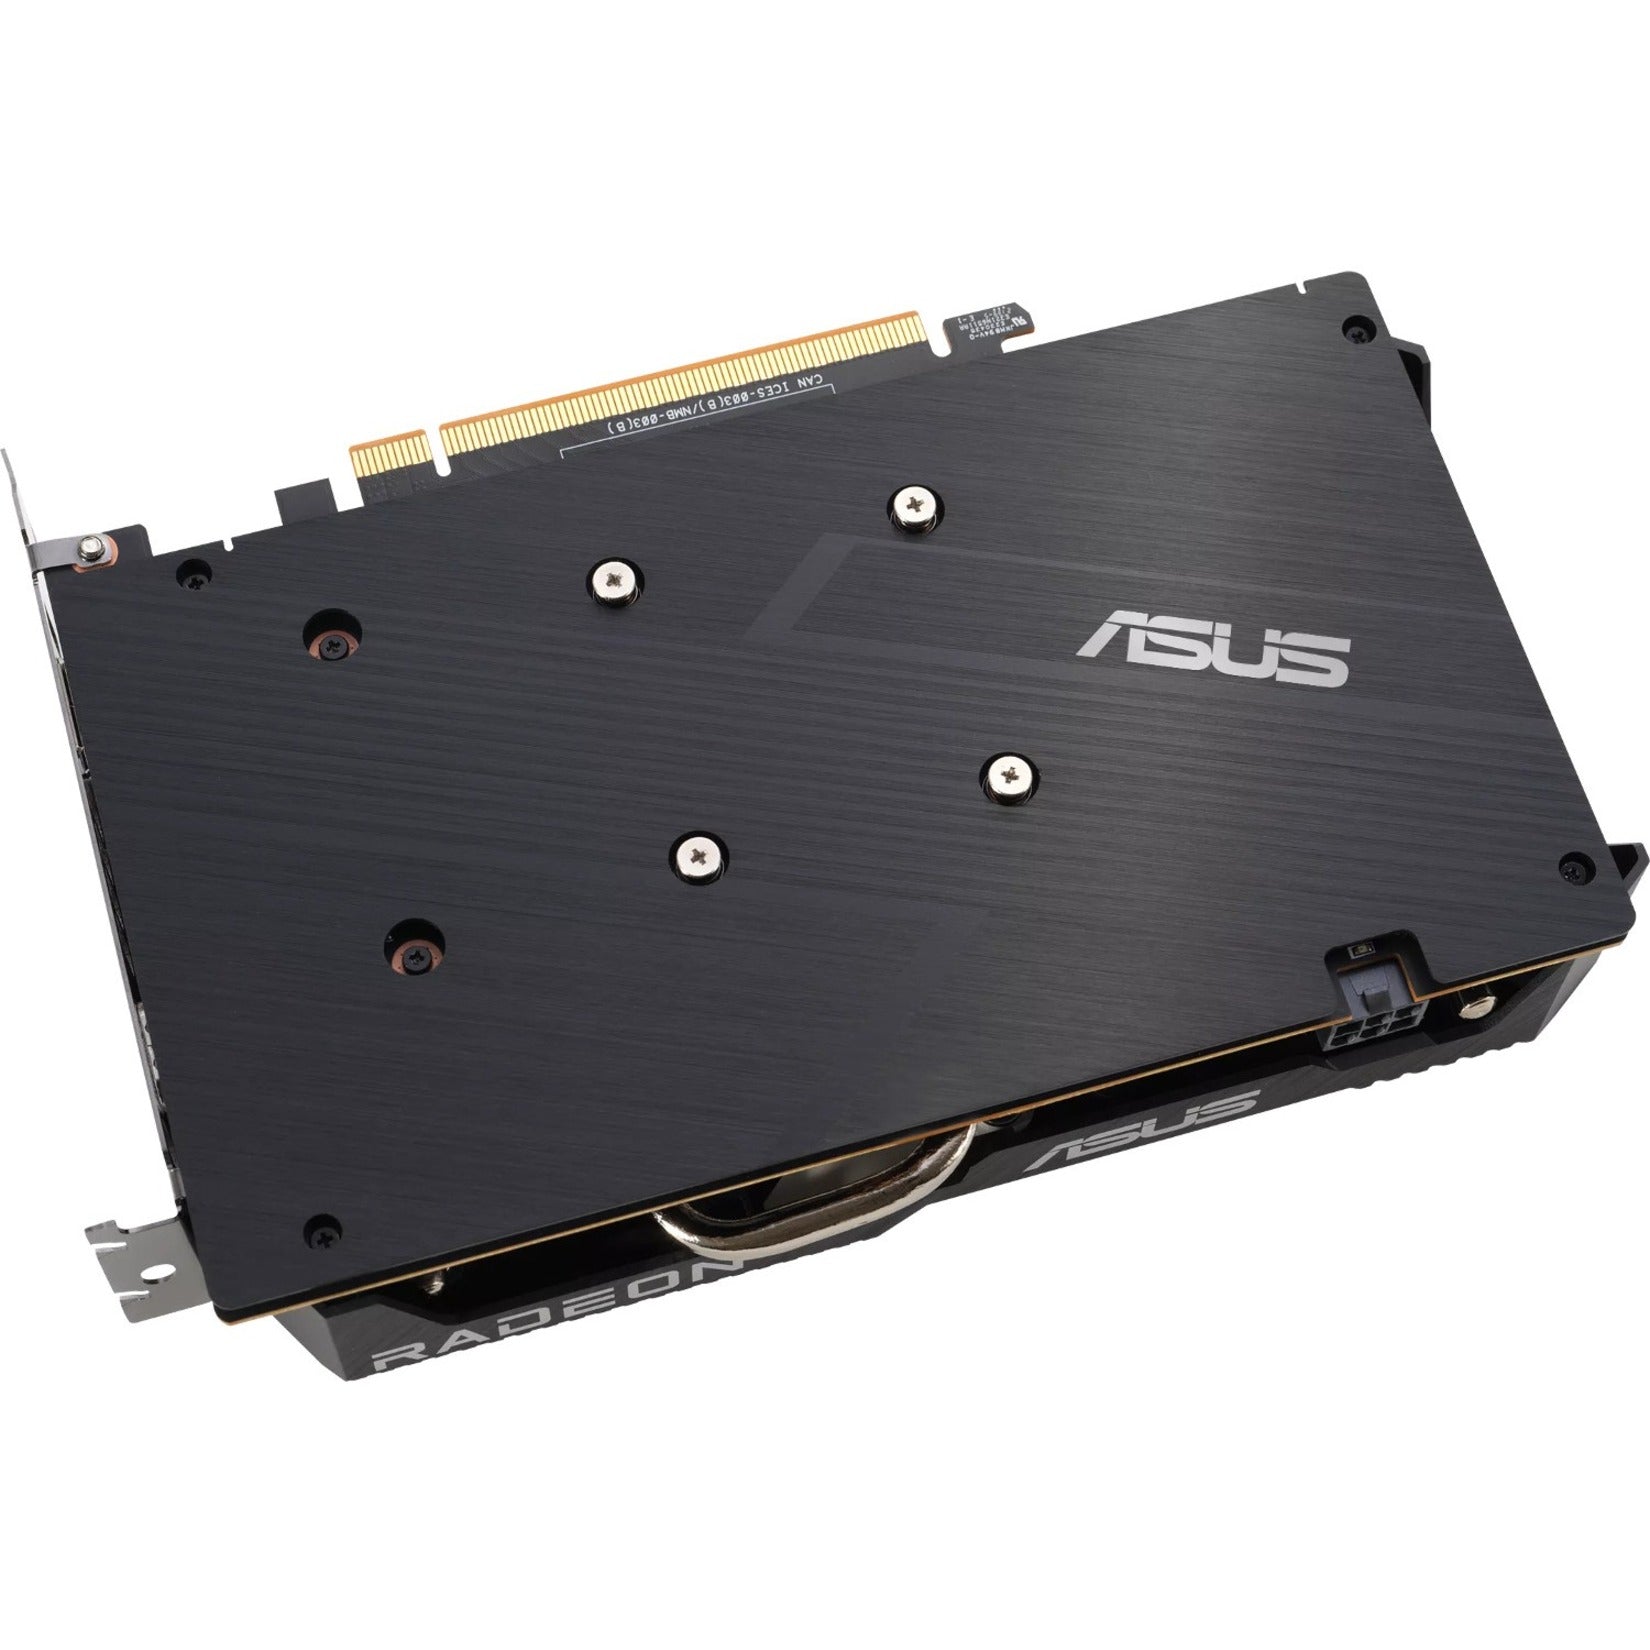 Asus DUAL-RX6500XT-O4G Dual Radeon RX 6500 XT OC Edition Graphic Card, 4 GB GDDR6, HDMI, DisplayPort, PCI Express 4.0